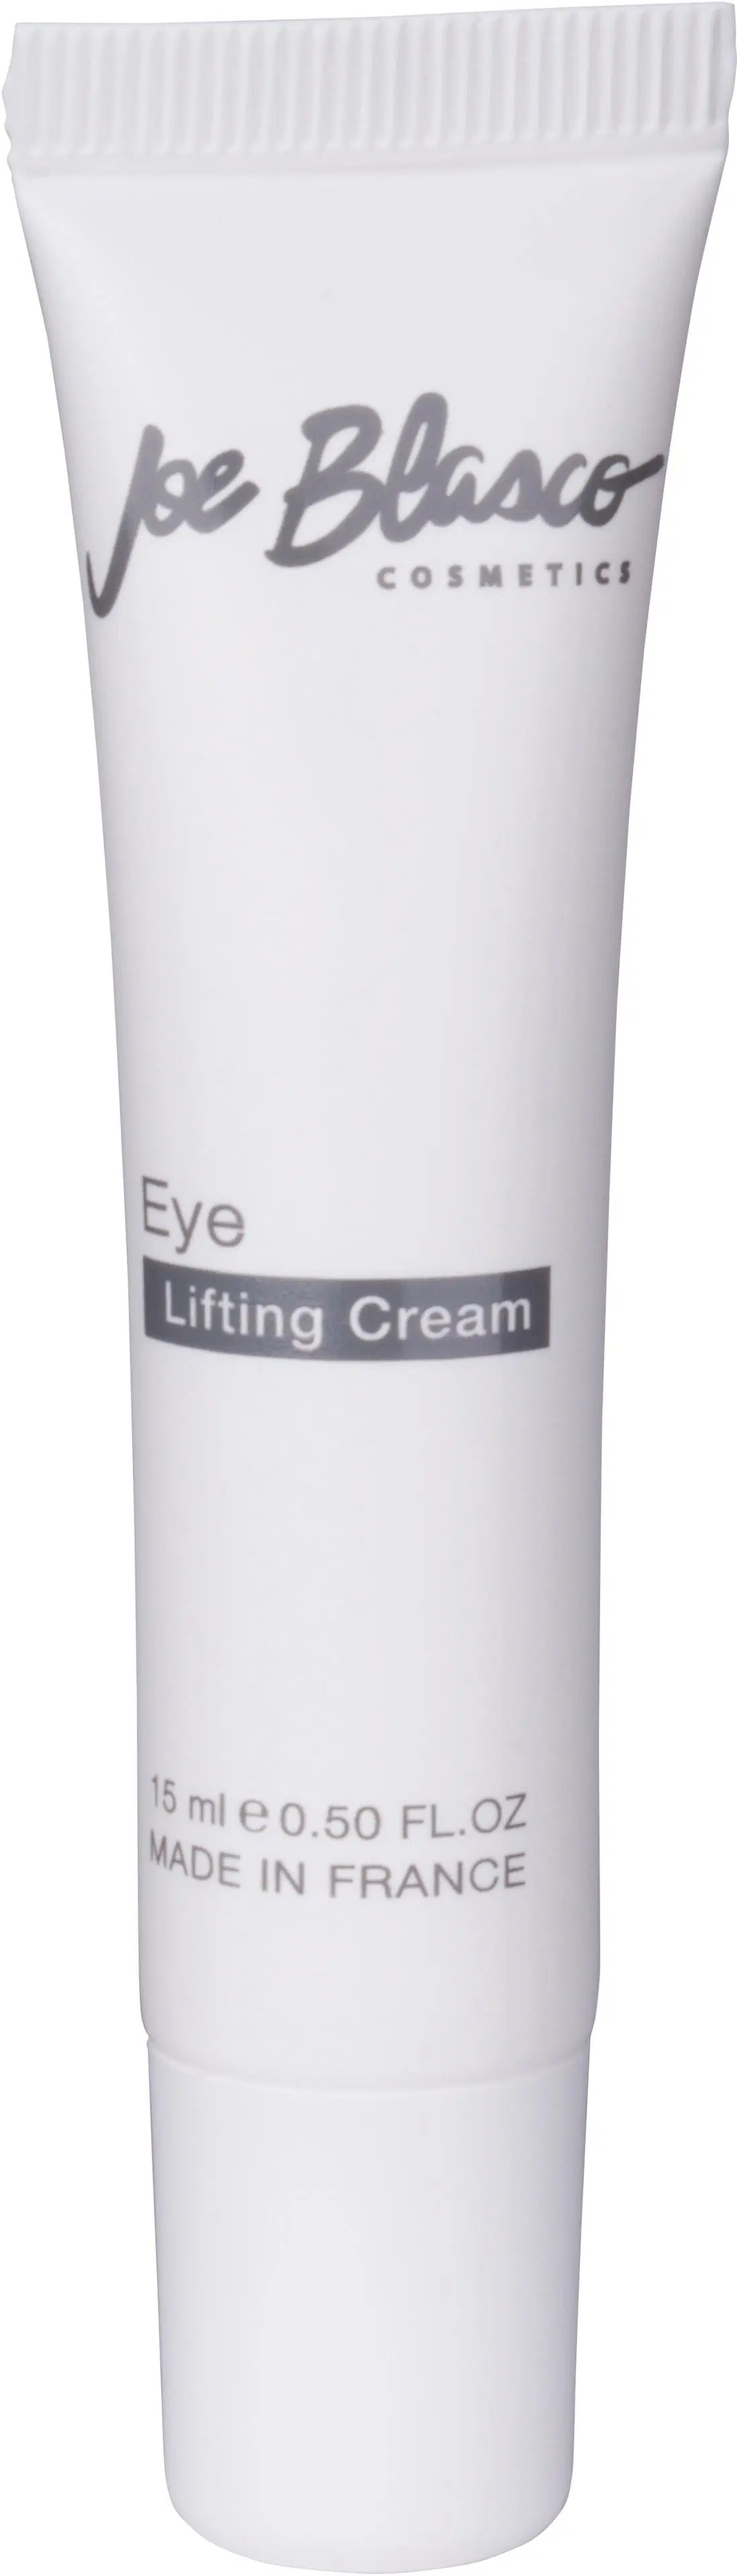 Joe Blasco Eye Lifting Cream silmänympärysvoide 15 ml